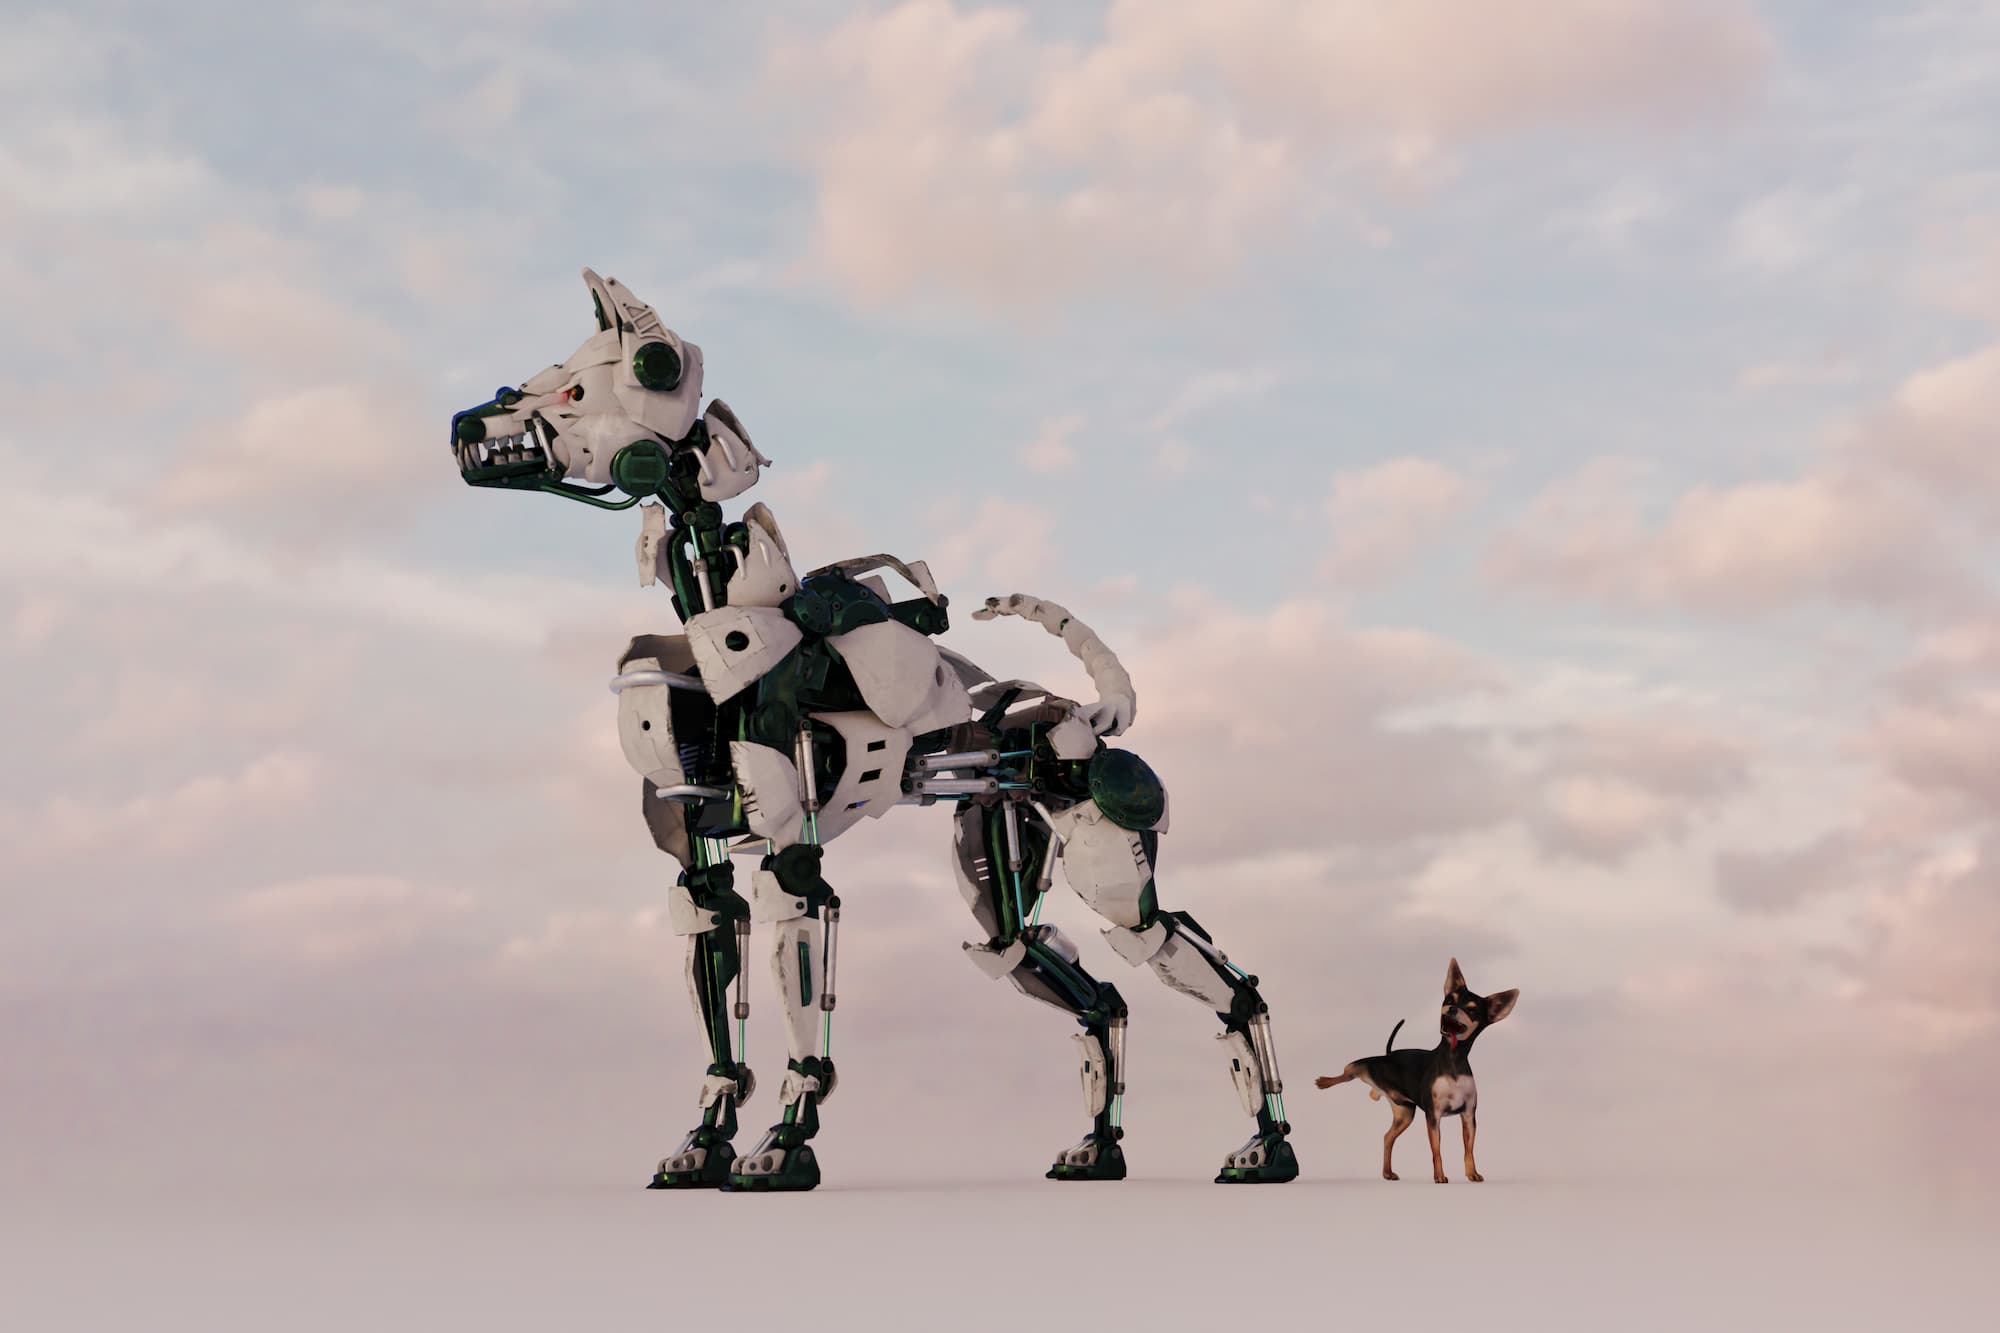 Robot dog humour series: chihuahua urinates on robot dog leg